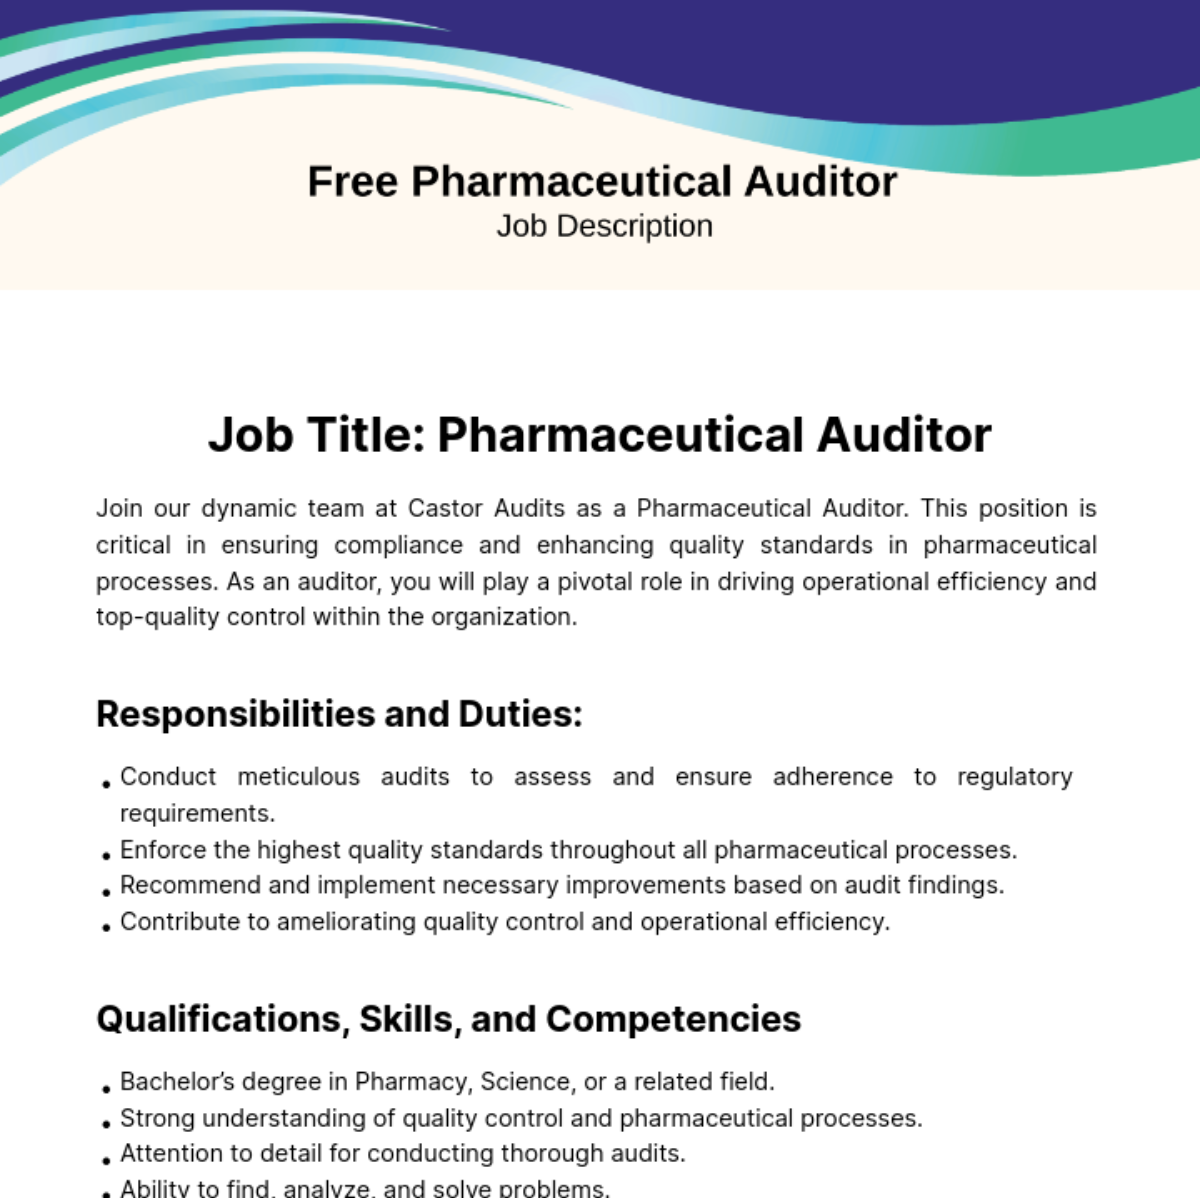 Free Pharmaceutical Auditor Job Description Template